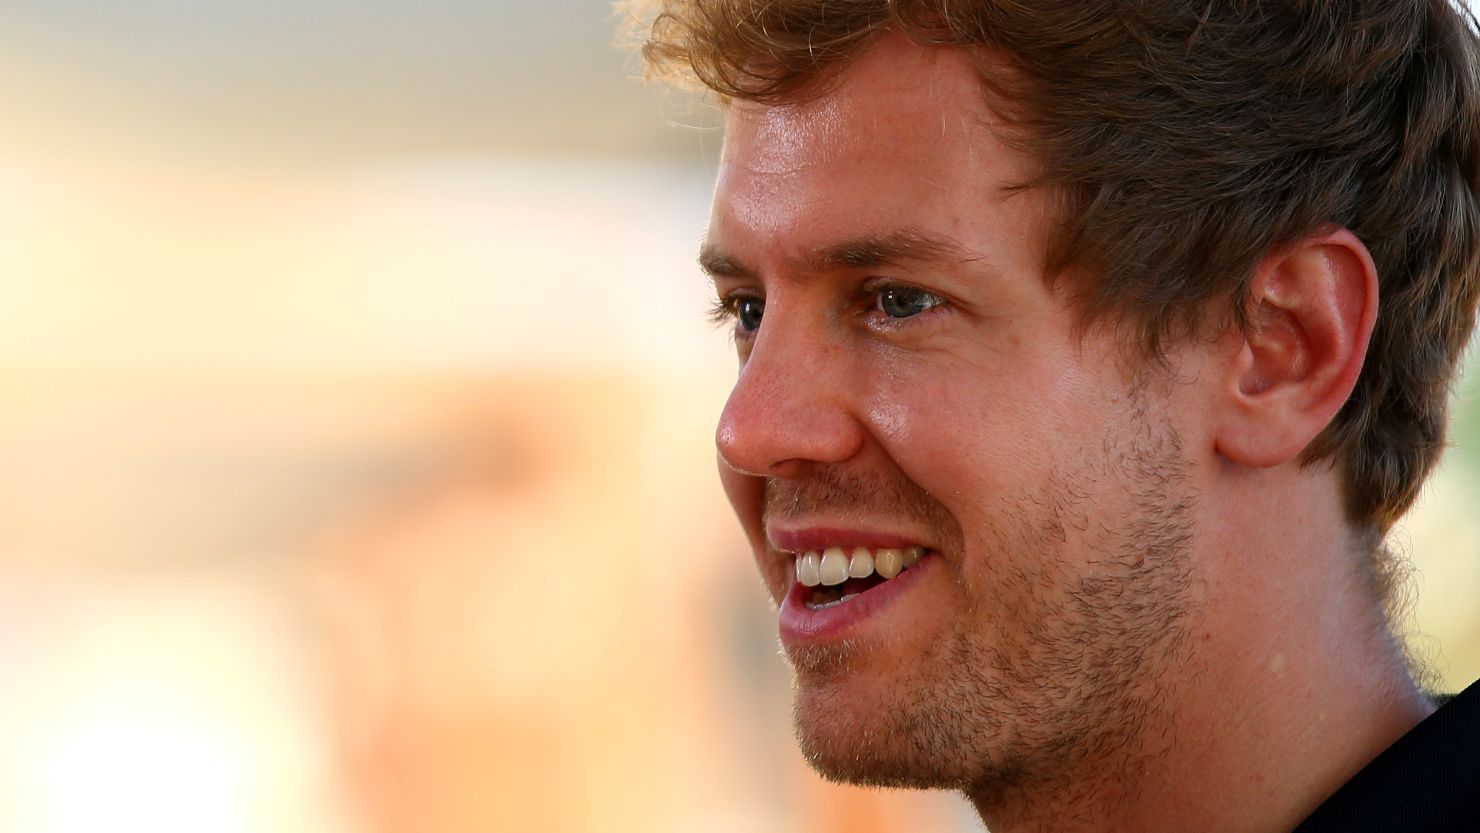 Sebastian Vettel is beginning a new chapter of his illustrious Formula One career with Ferrari